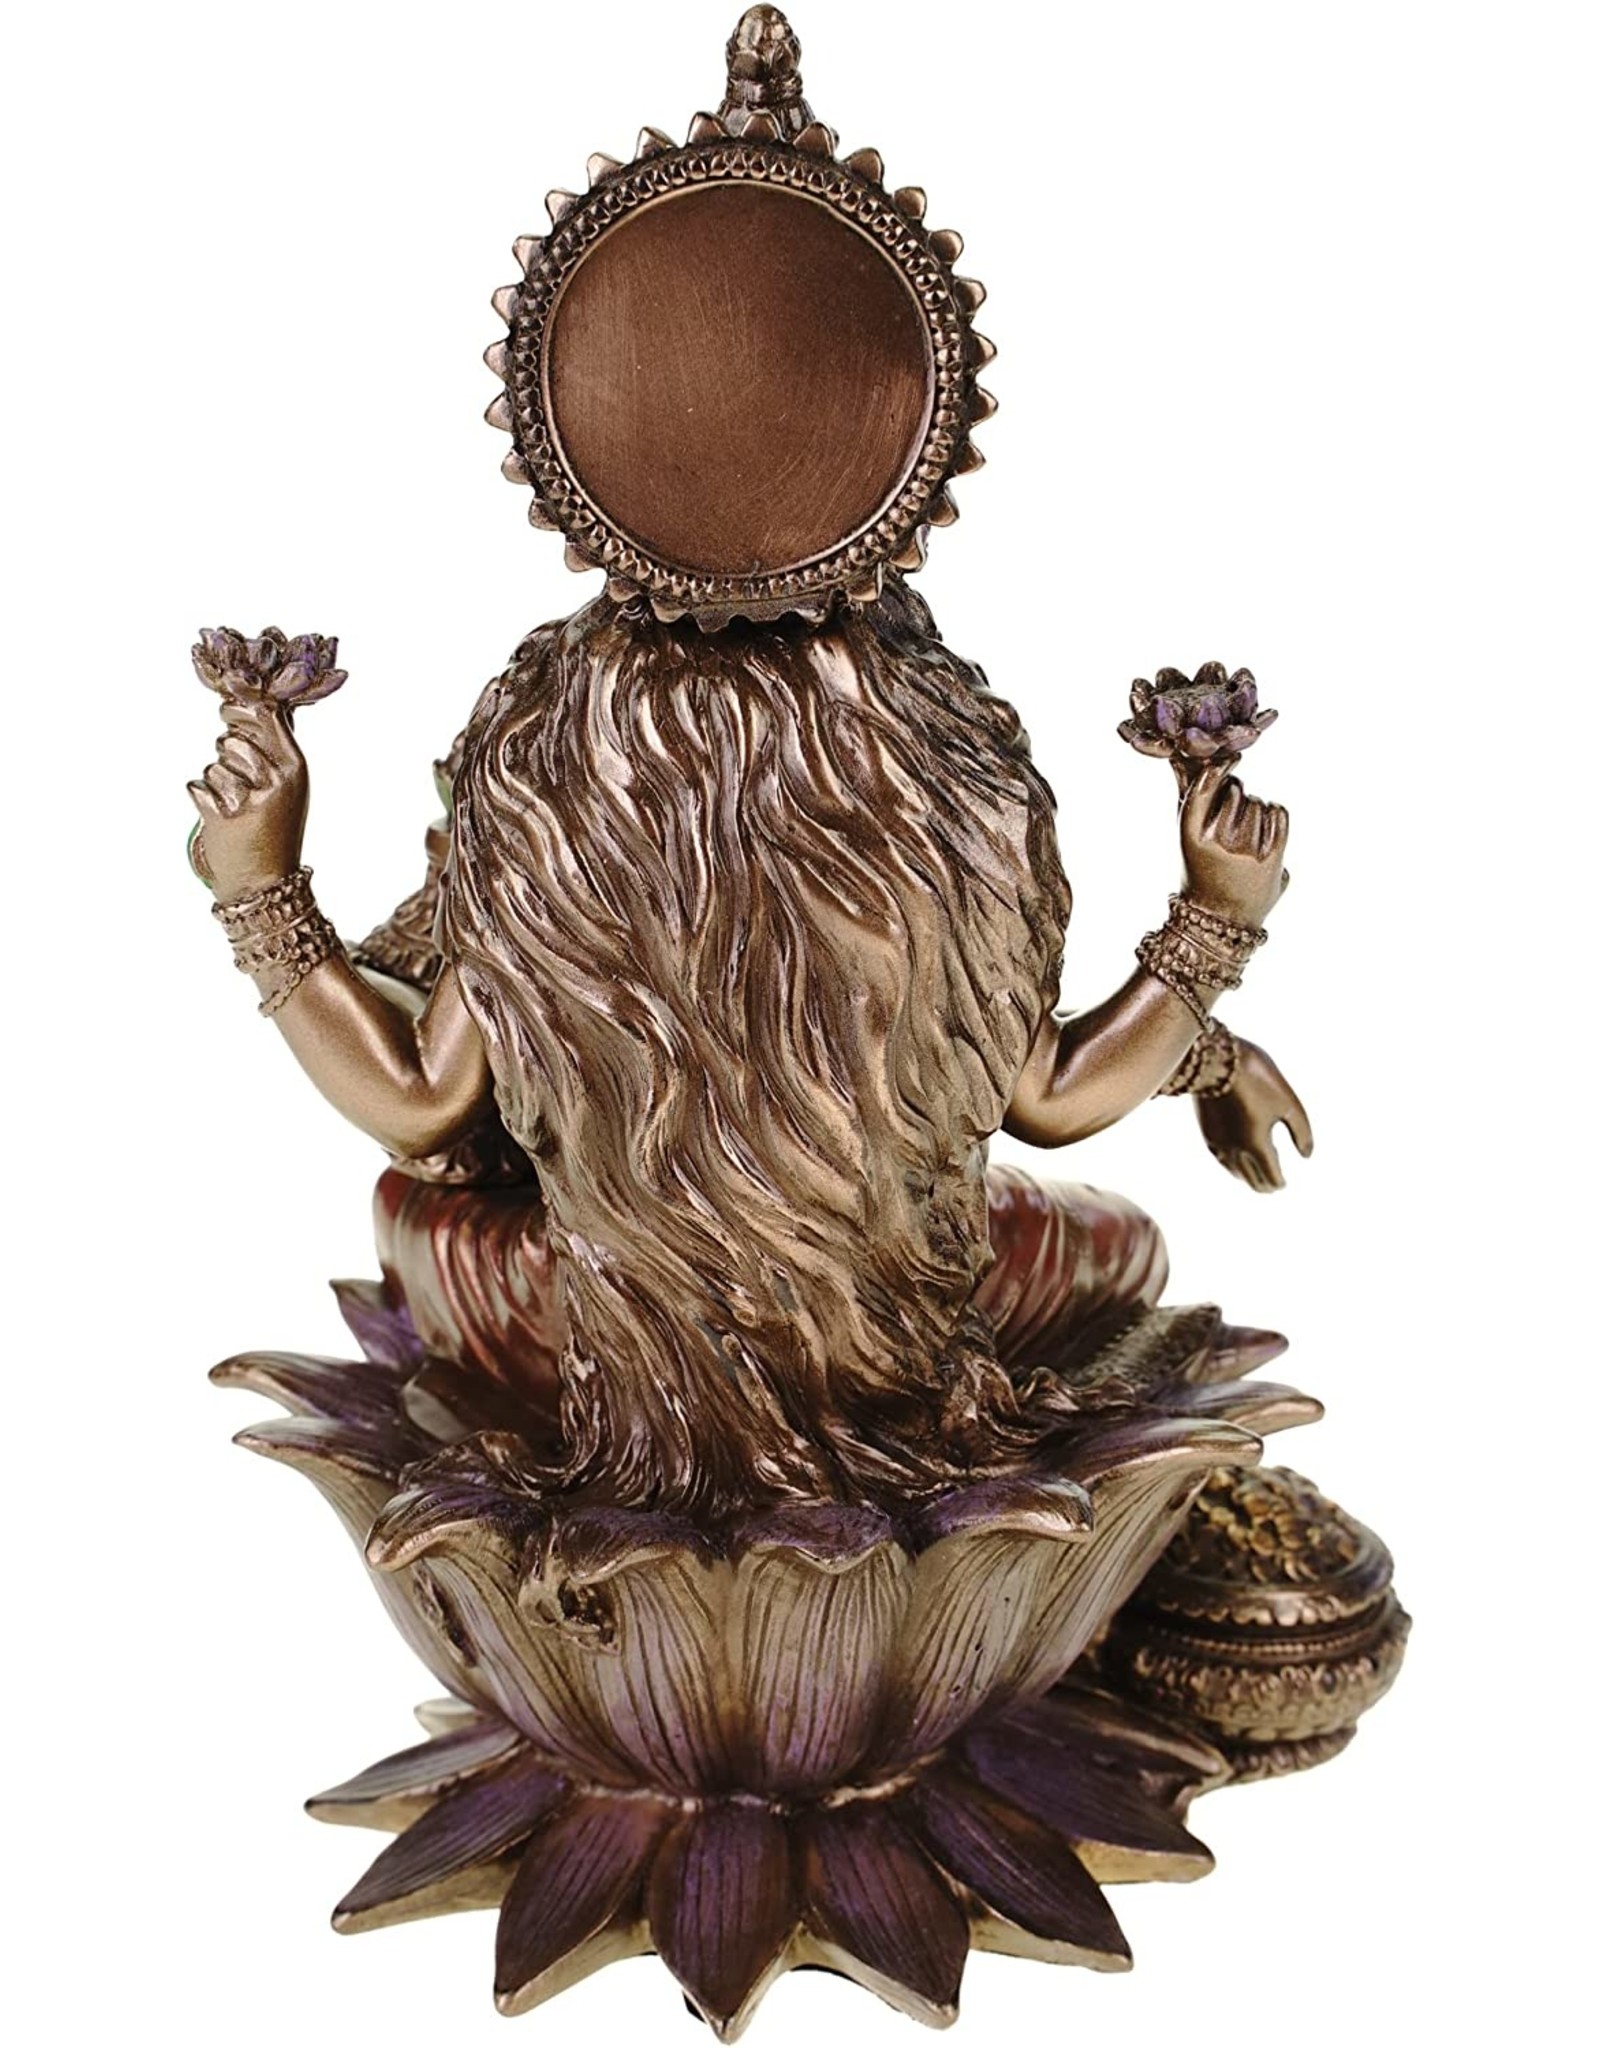 Veronese Design Giftware Figurines Collectables - Lakshmi Hindu Goddess Veronese Design